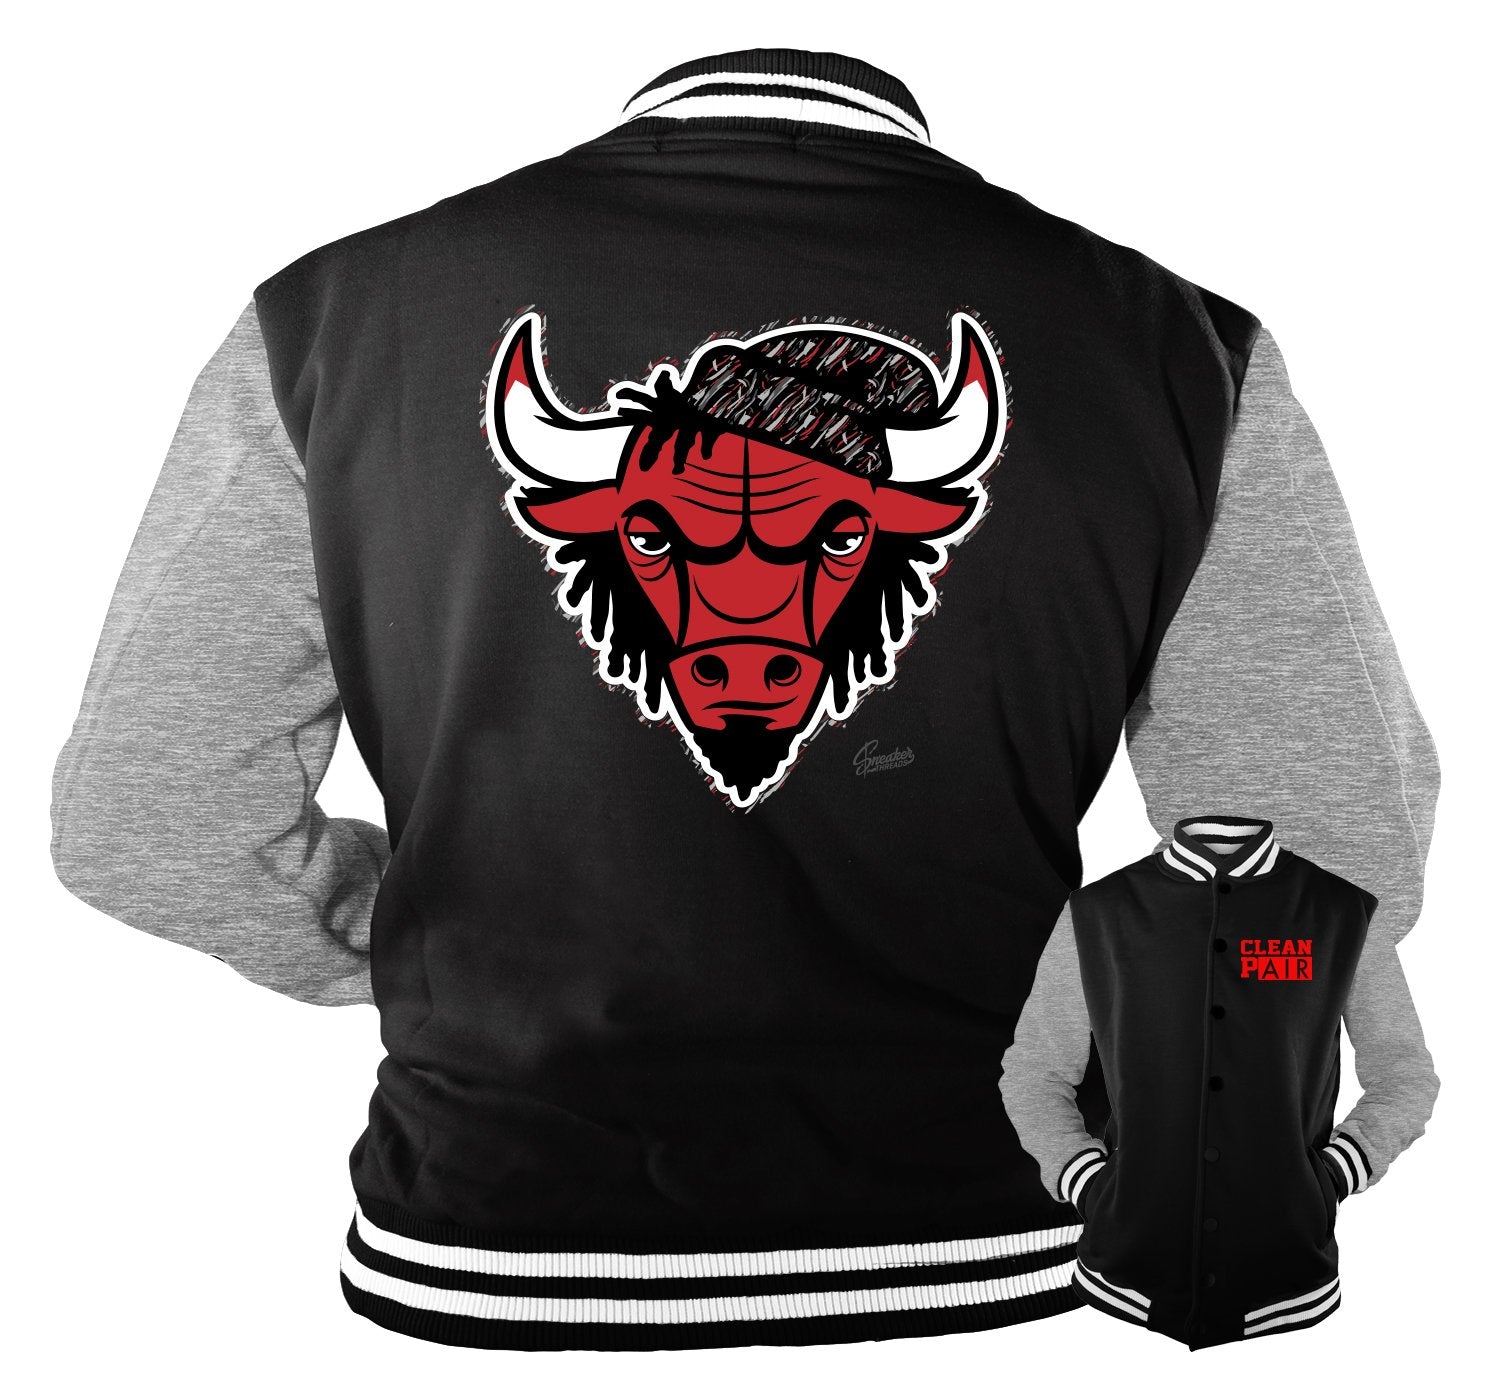 Nike Mens Satin Bred Chicago Bulls Jacket,Black Red,X-Large